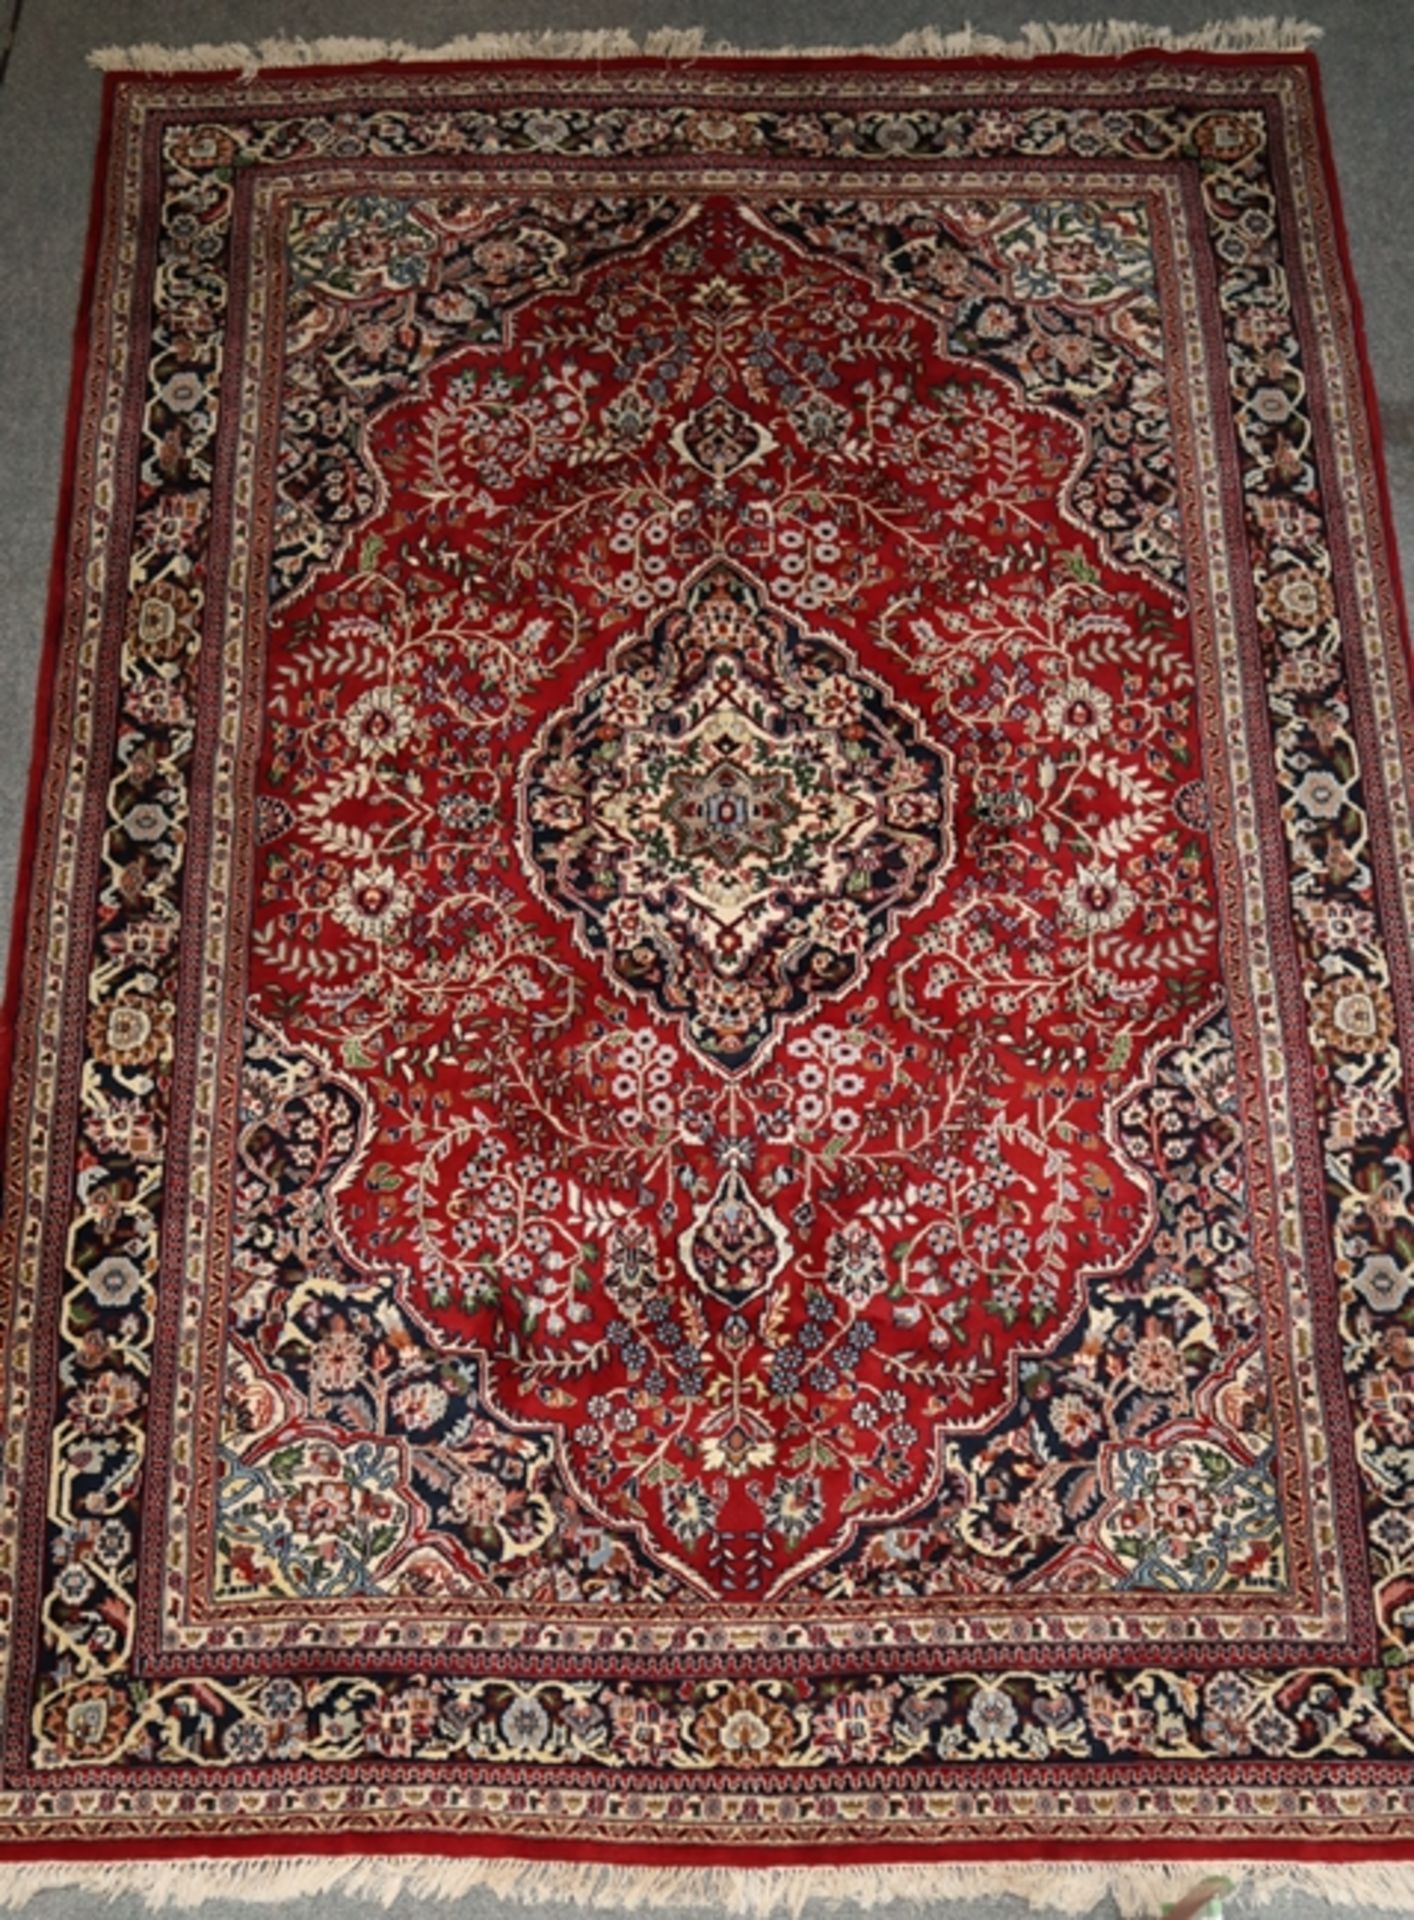 Keschan-Teppich - Wolle, rotgrundig, zentrales Medaillon, ornamentales und florales Muster, mehrfac